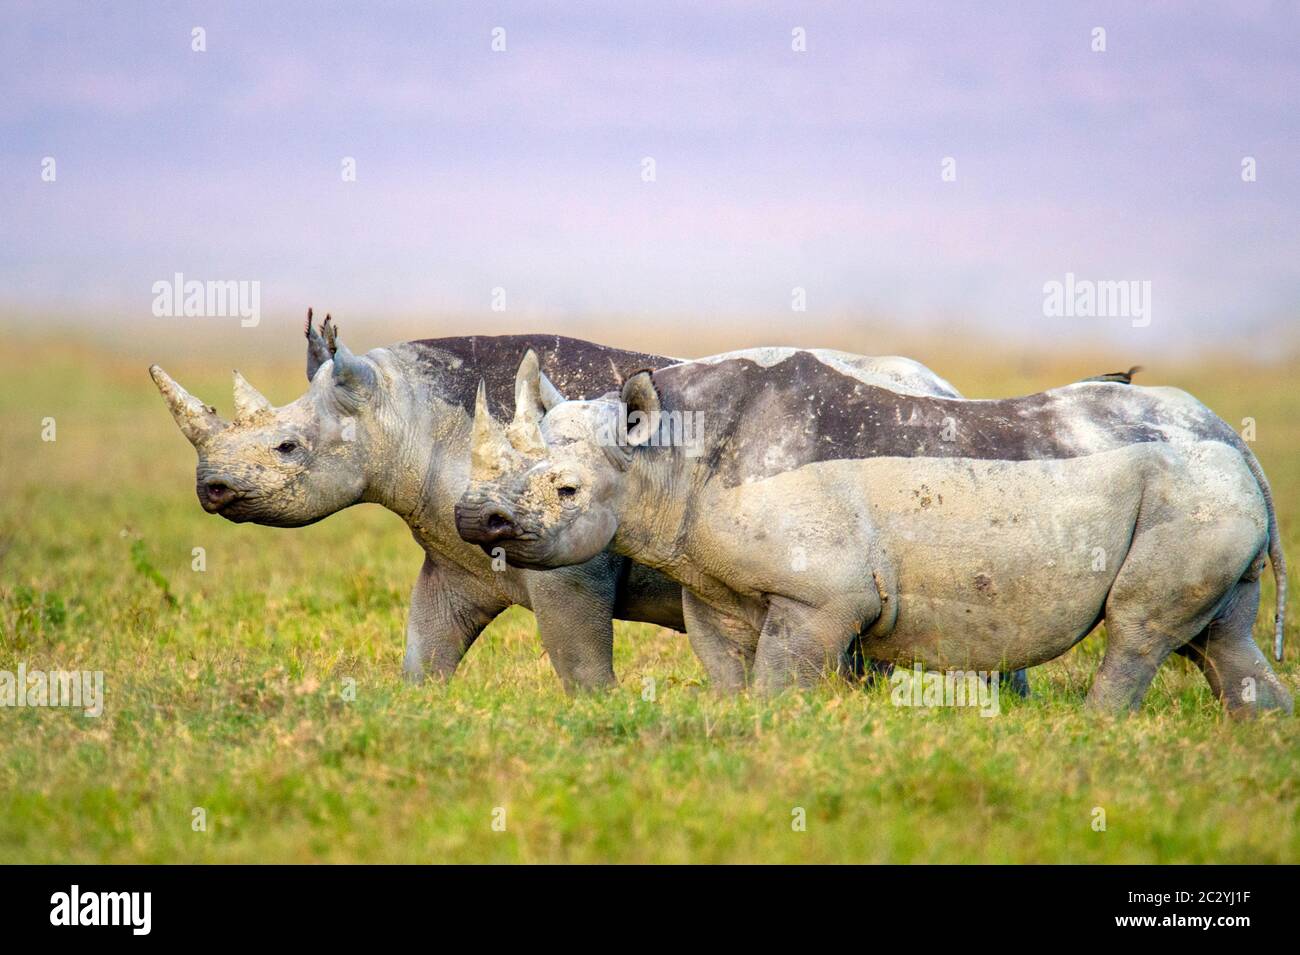 Two black rhinoceroses (Diceros bicornis) walking on grass in Ngorongoro Conservation Area, Tanzania, Africa Stock Photo